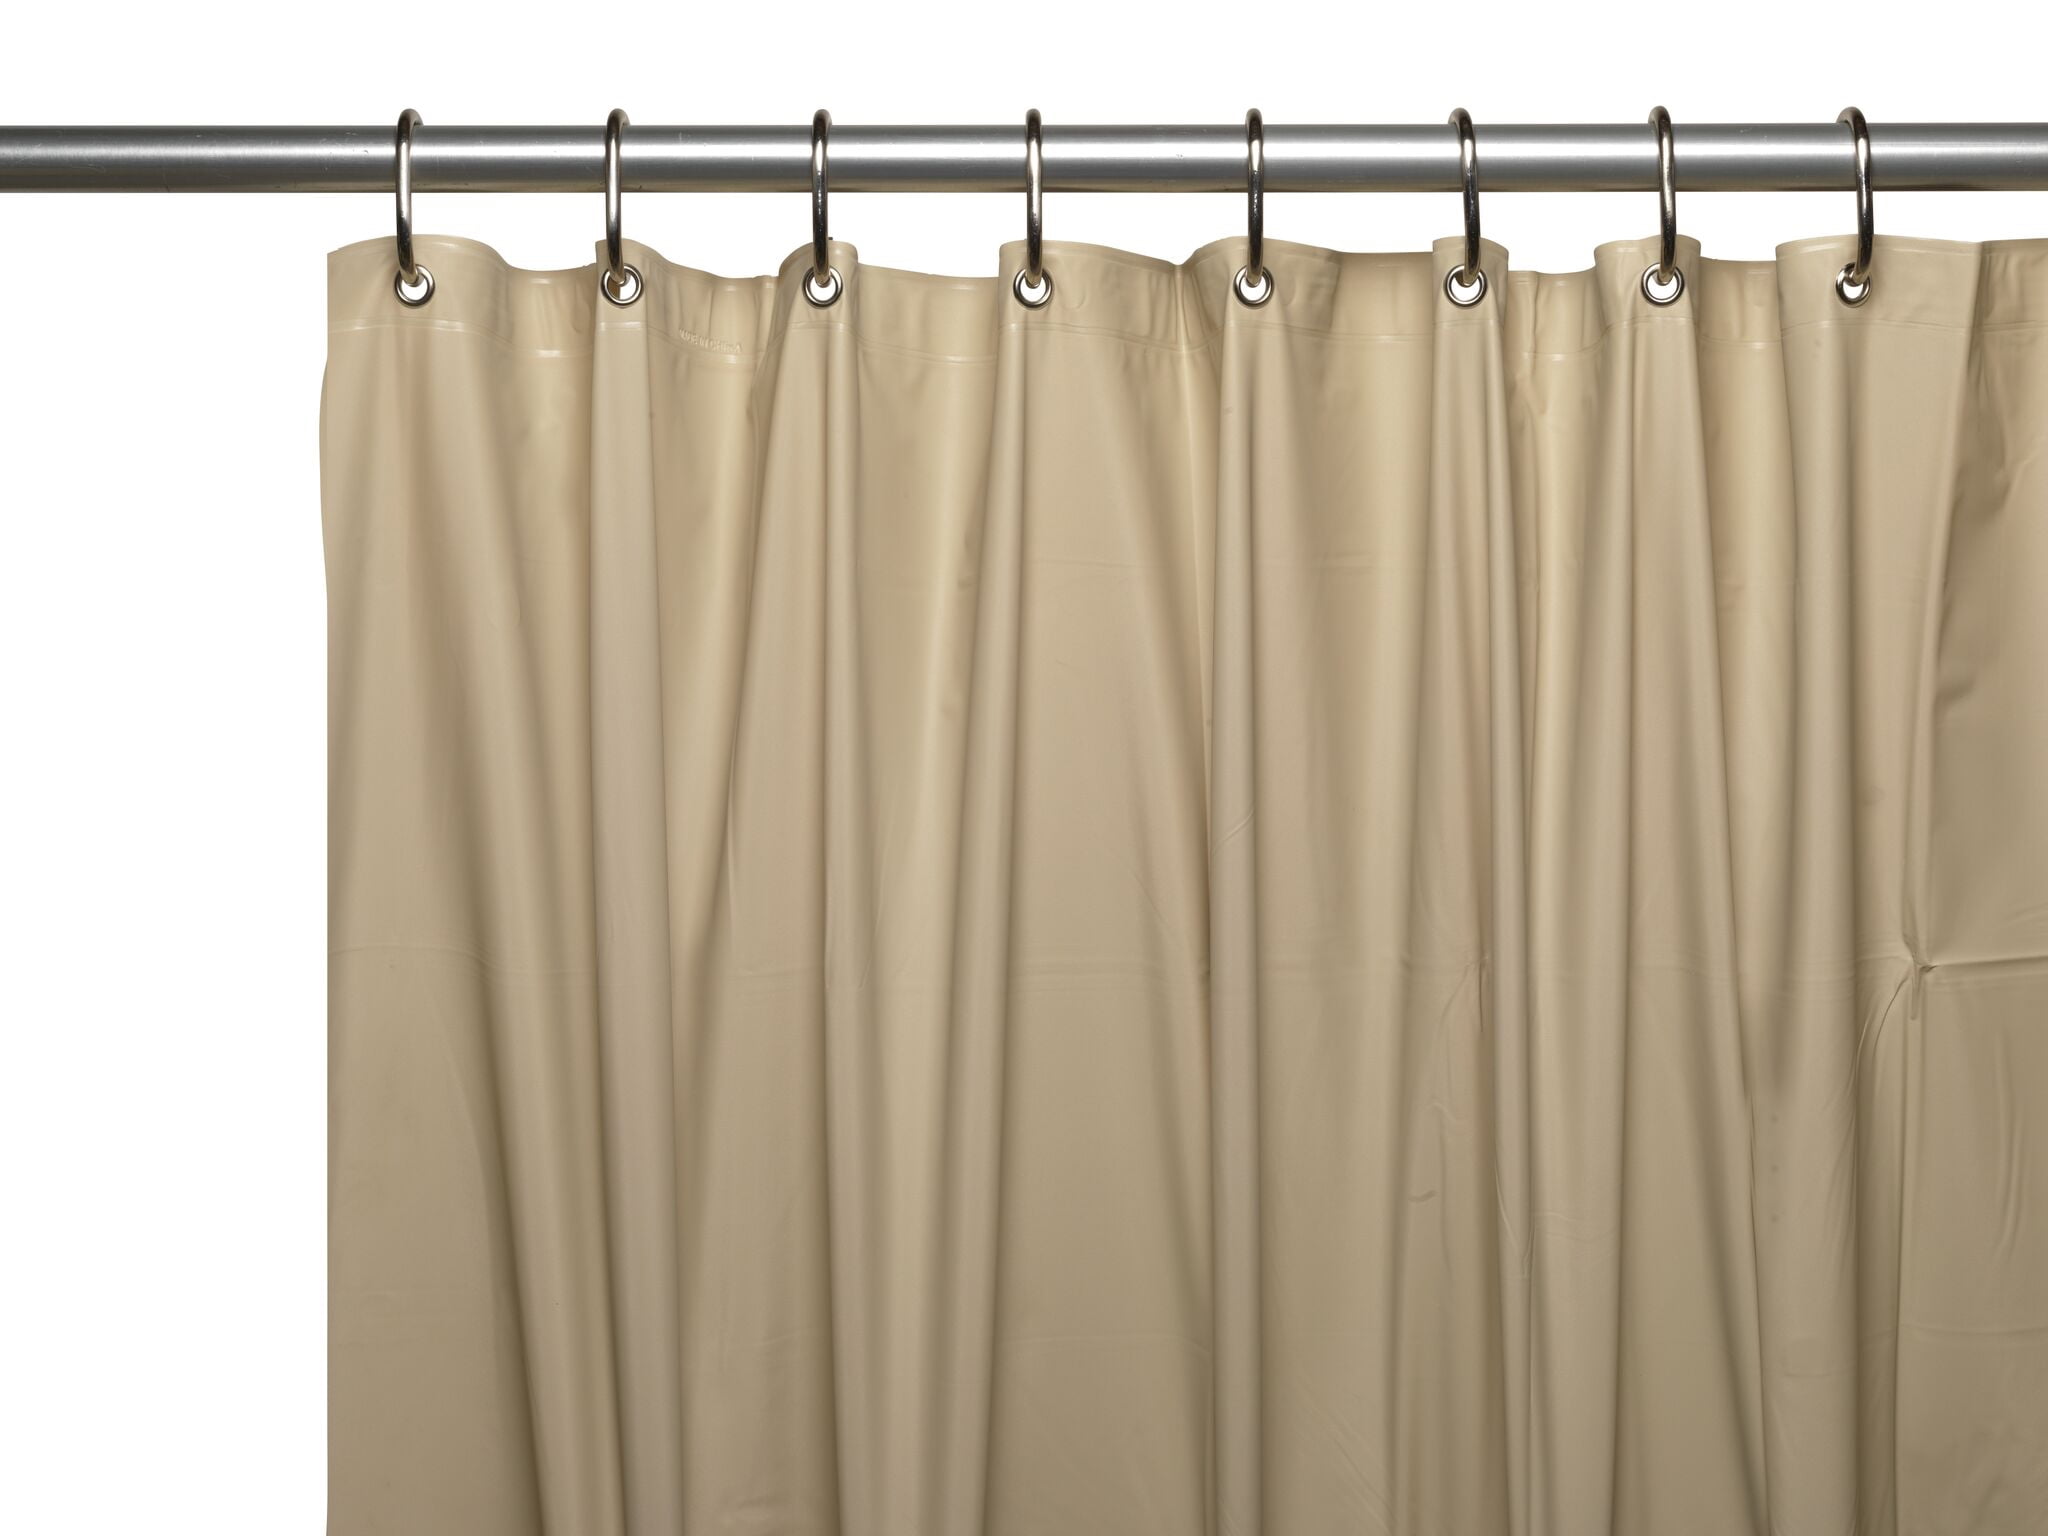 Magnets Grommets Navy Blue Shower Curtain Liner Mold Mildew Bacteria Resistant 